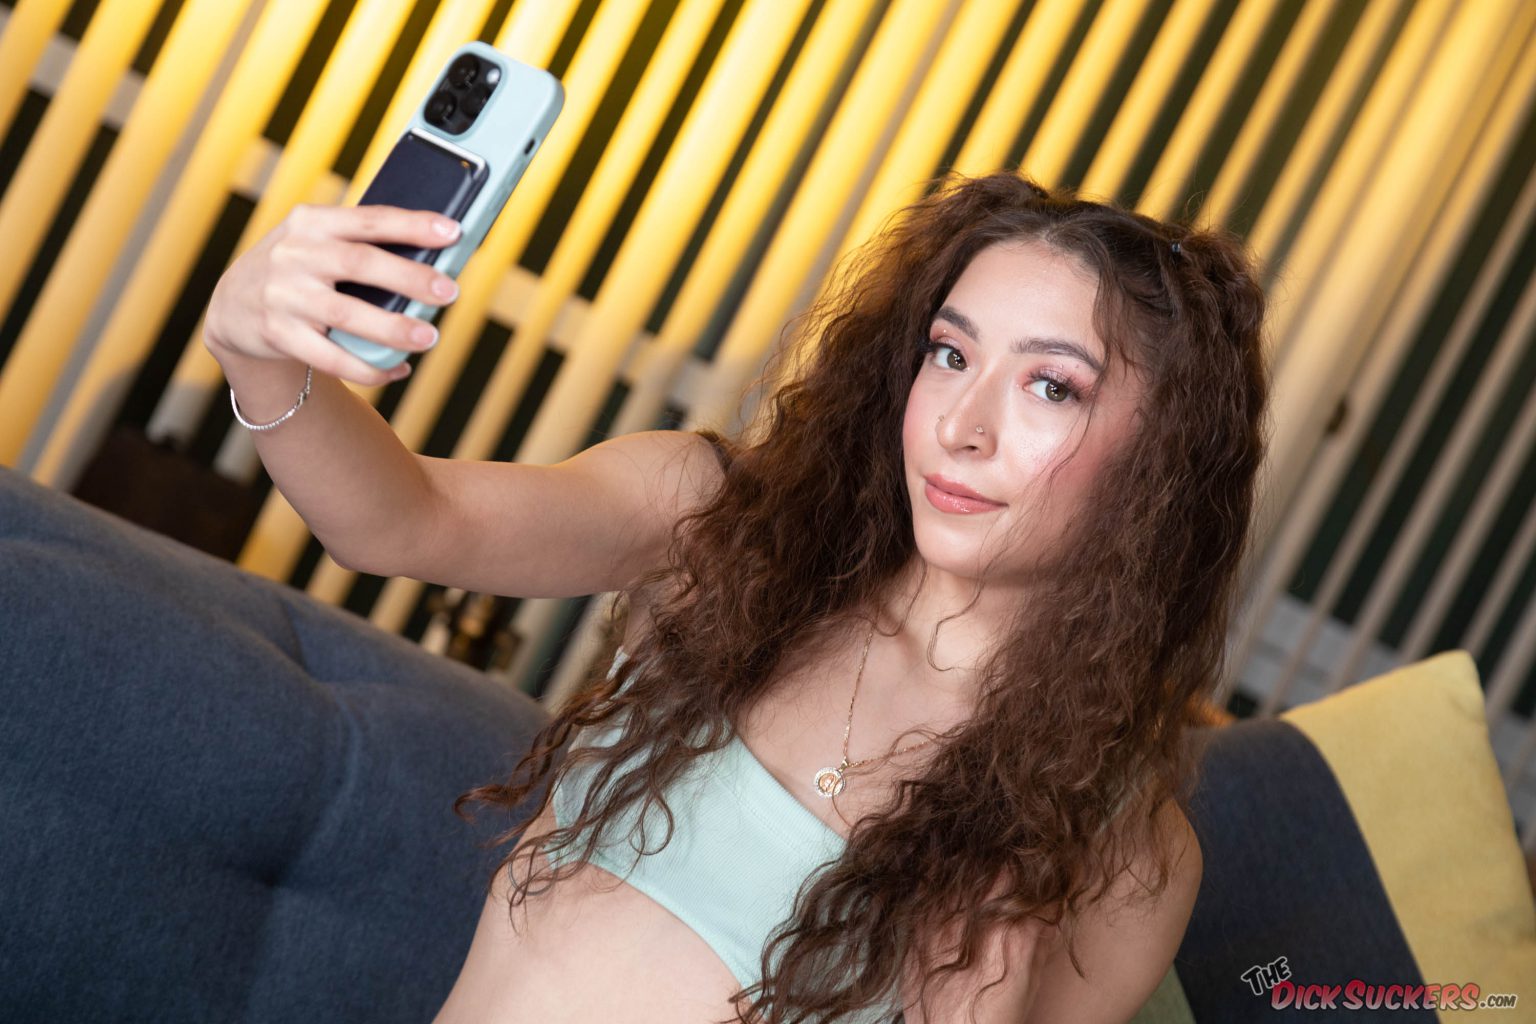 Amber Summer Adult Actress taking a selfie